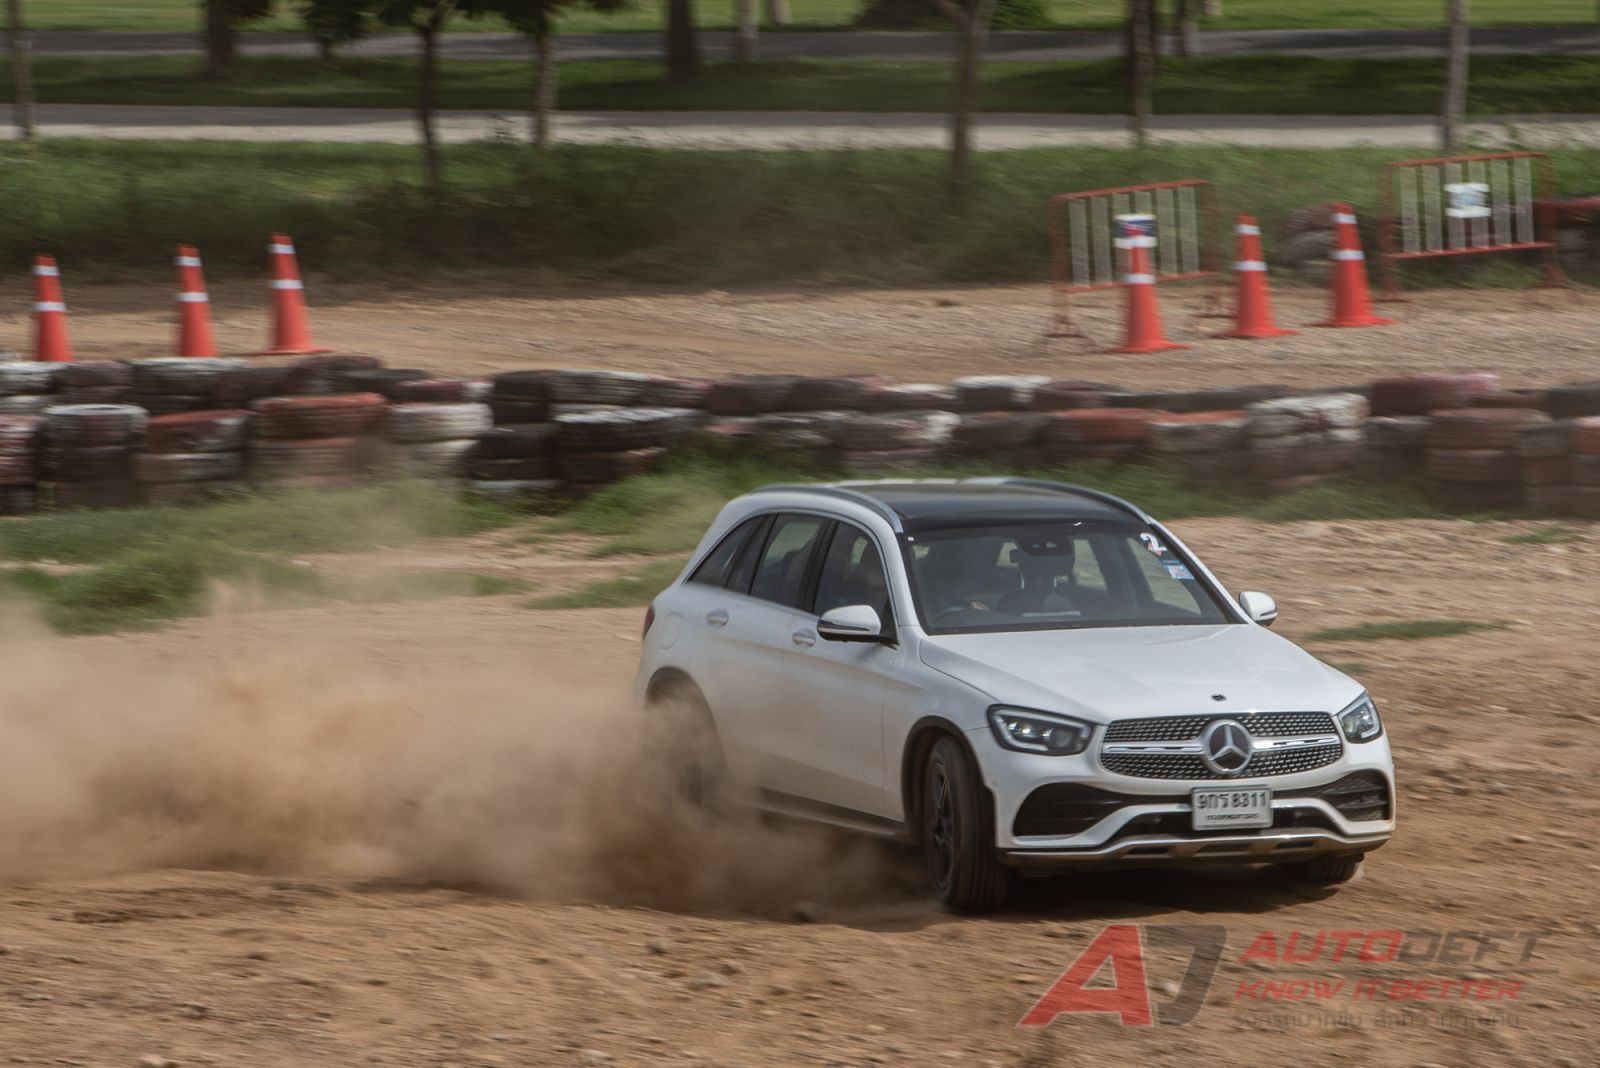 Mercedes-Benz SUV Driving Events 